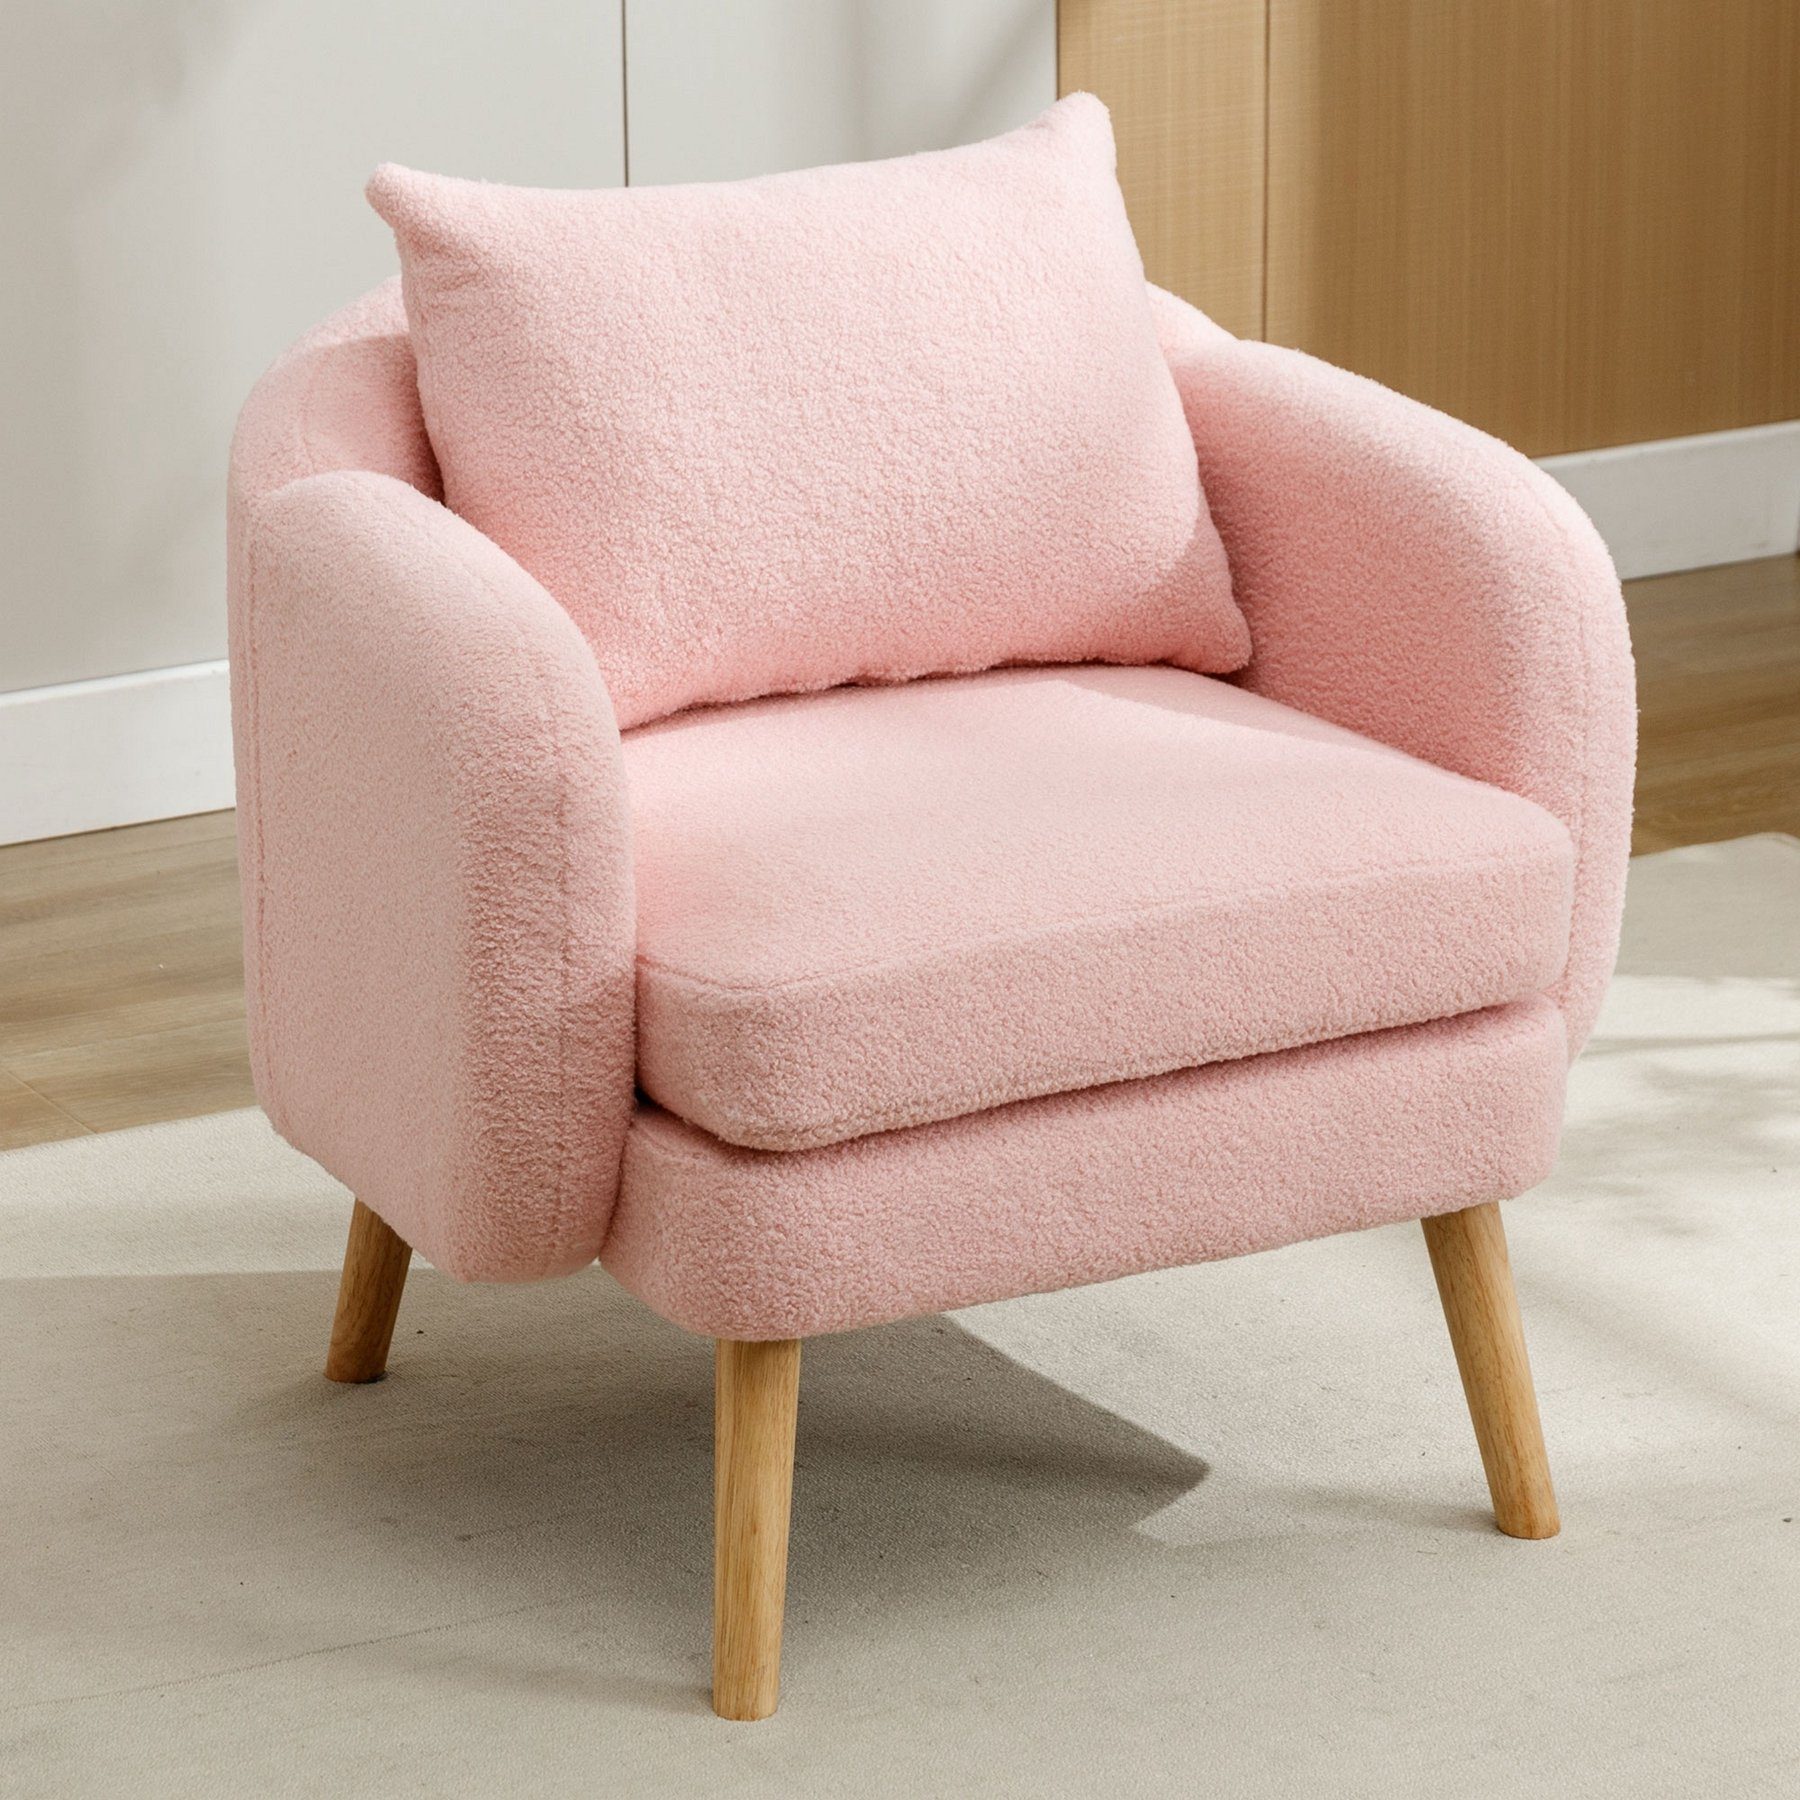 Celya Relaxsessel Teddy Samt Sessel mit Kissen,einzelner Sofa-Sessel,Freizeit Stuhl rosa